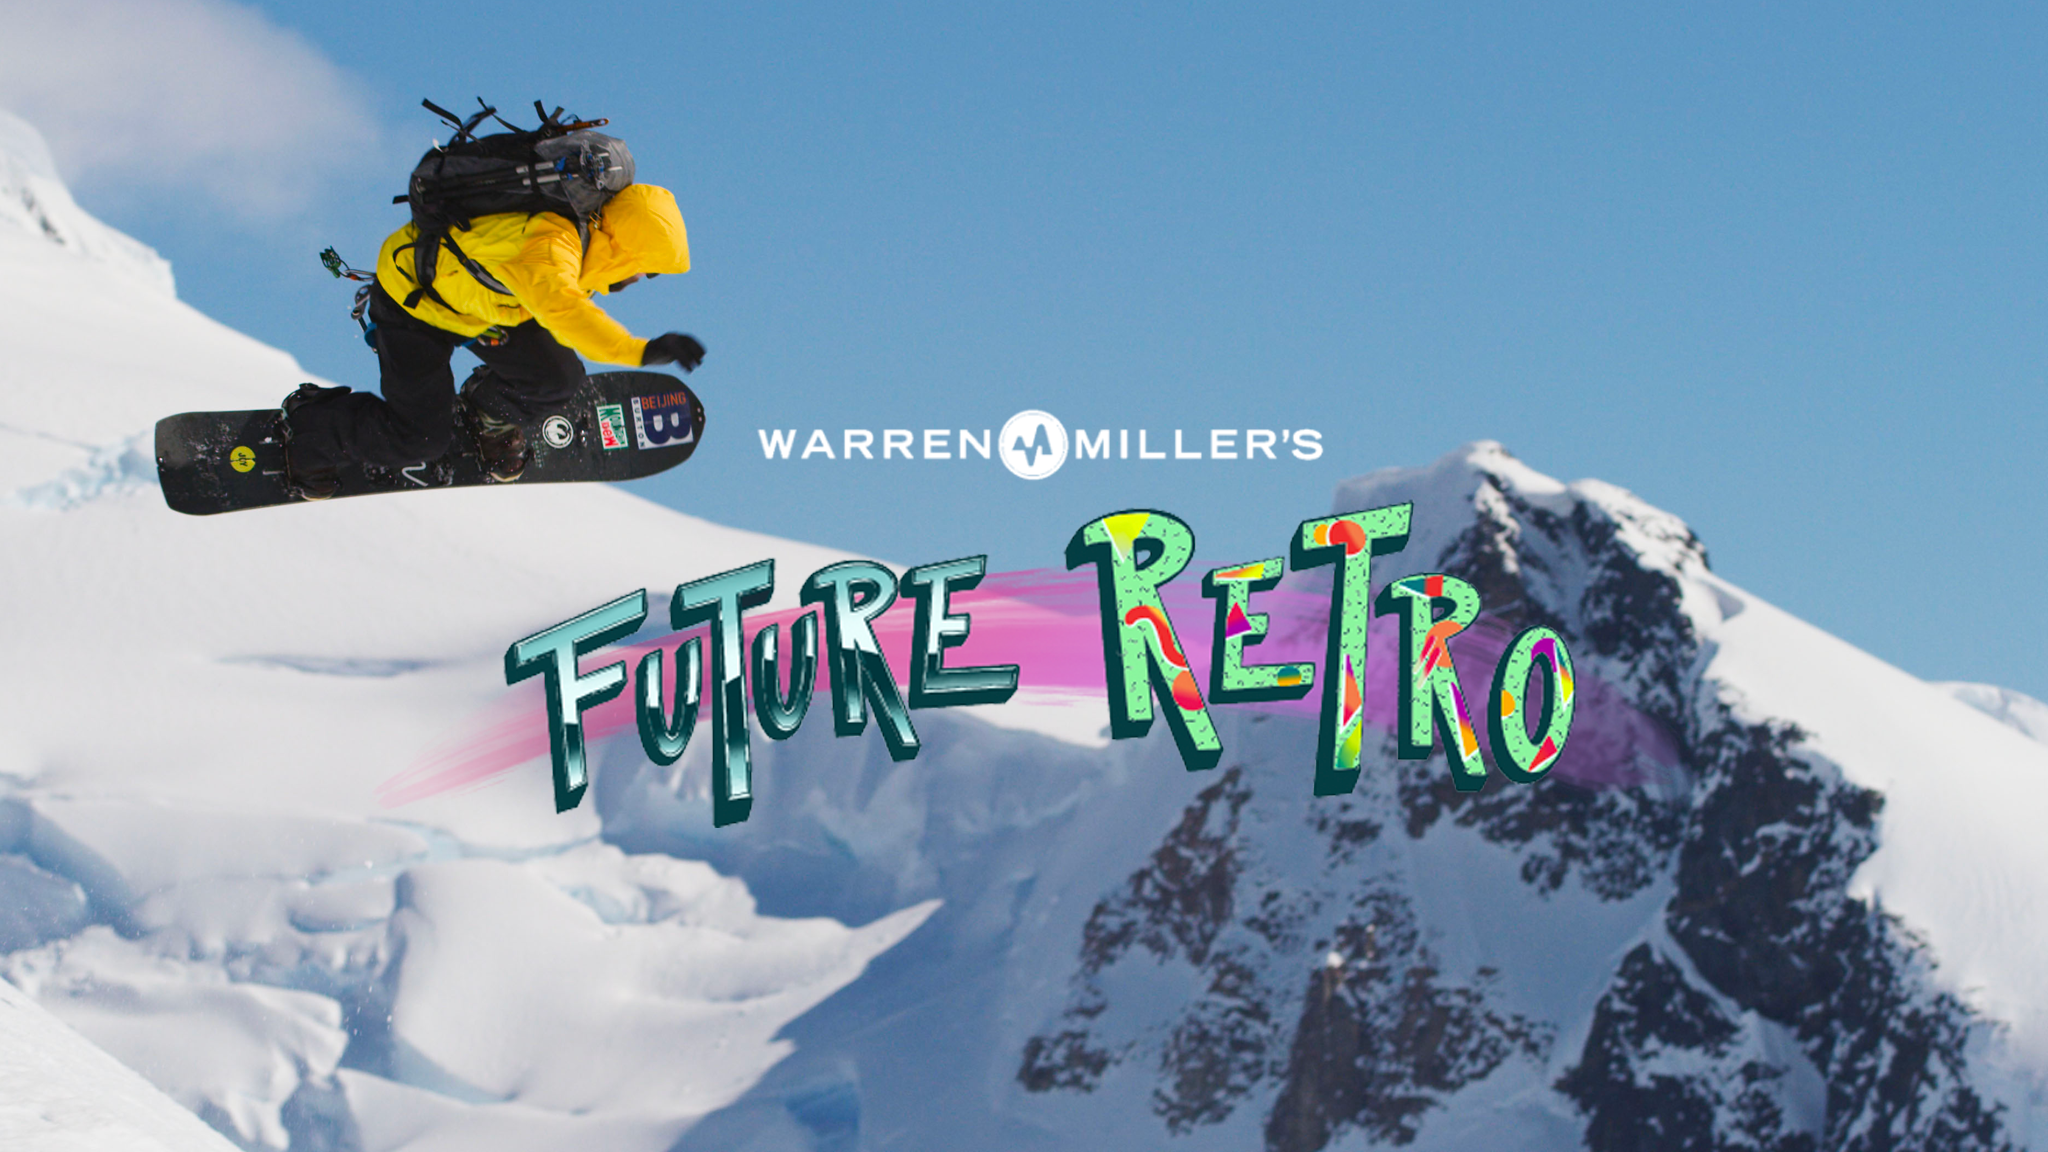 Warren Miller's "Future Retro" movie